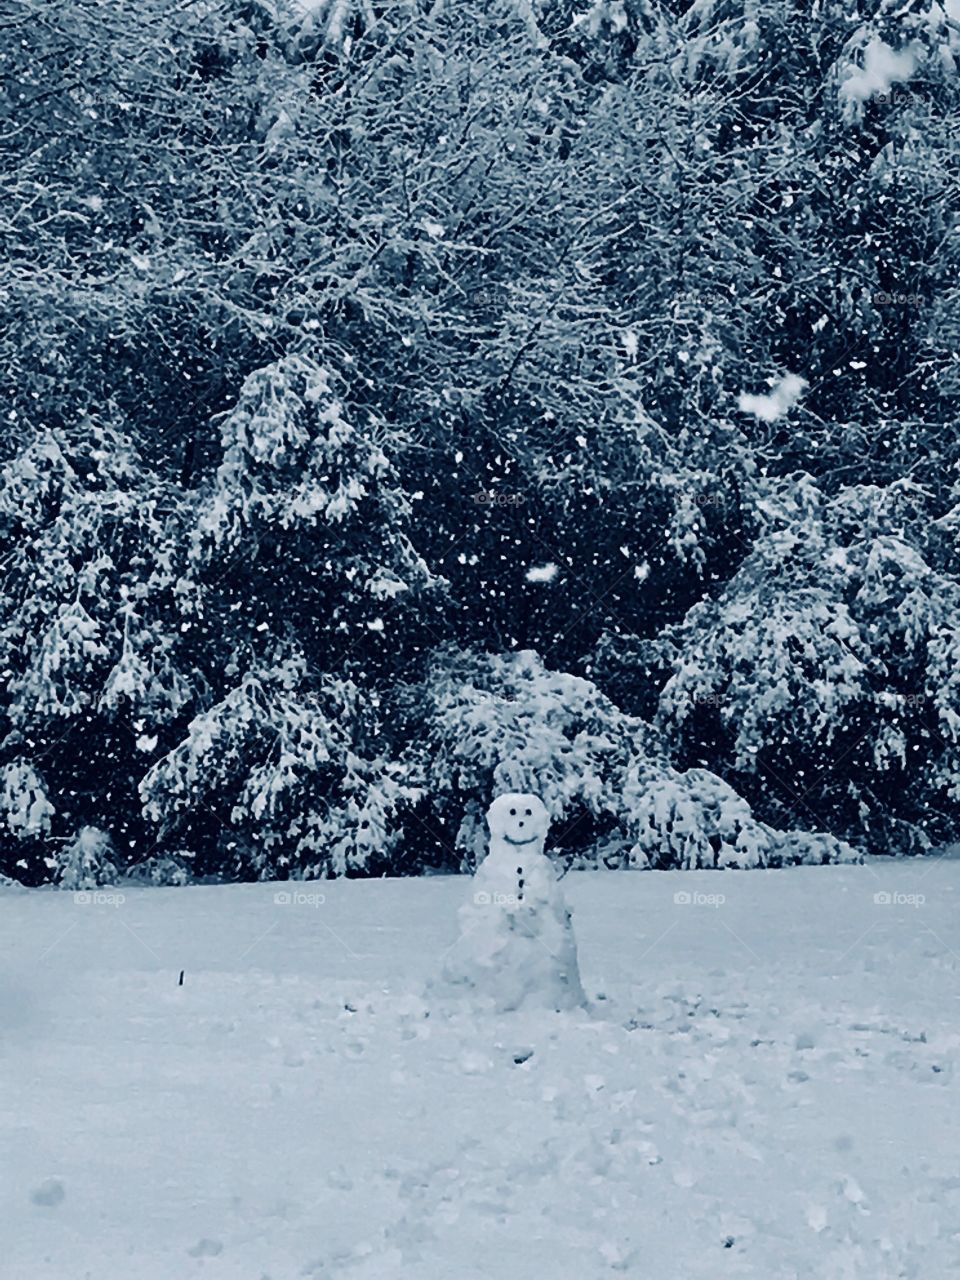 Snowman in winter! NC 2018